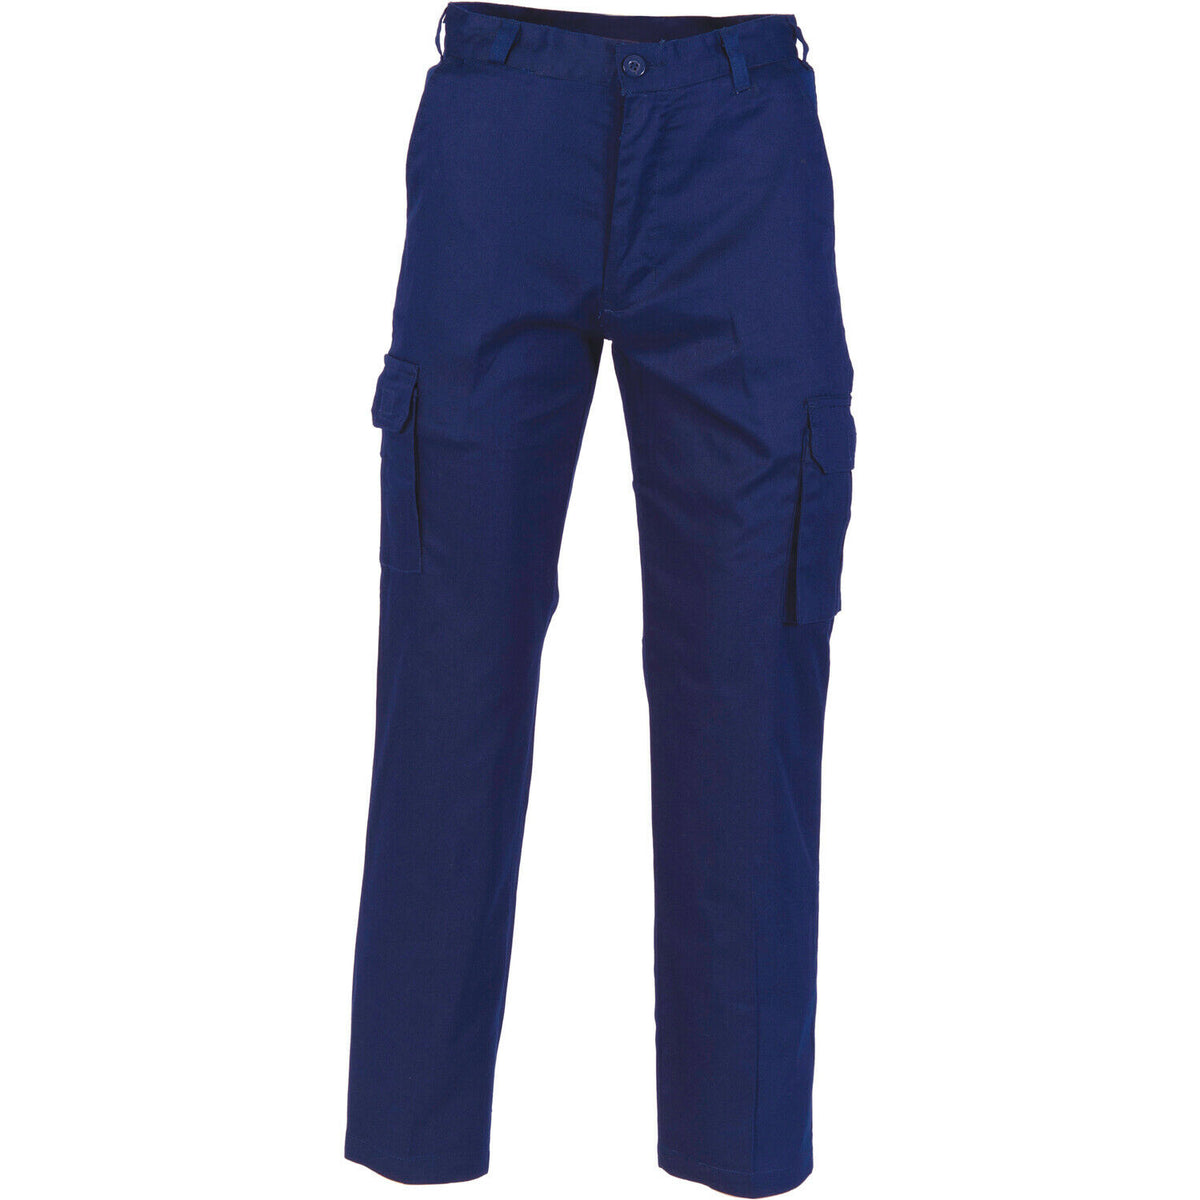 DNC Workwear Mens Cordura Knee Patch Cargo Pants Comfortable Work 3324